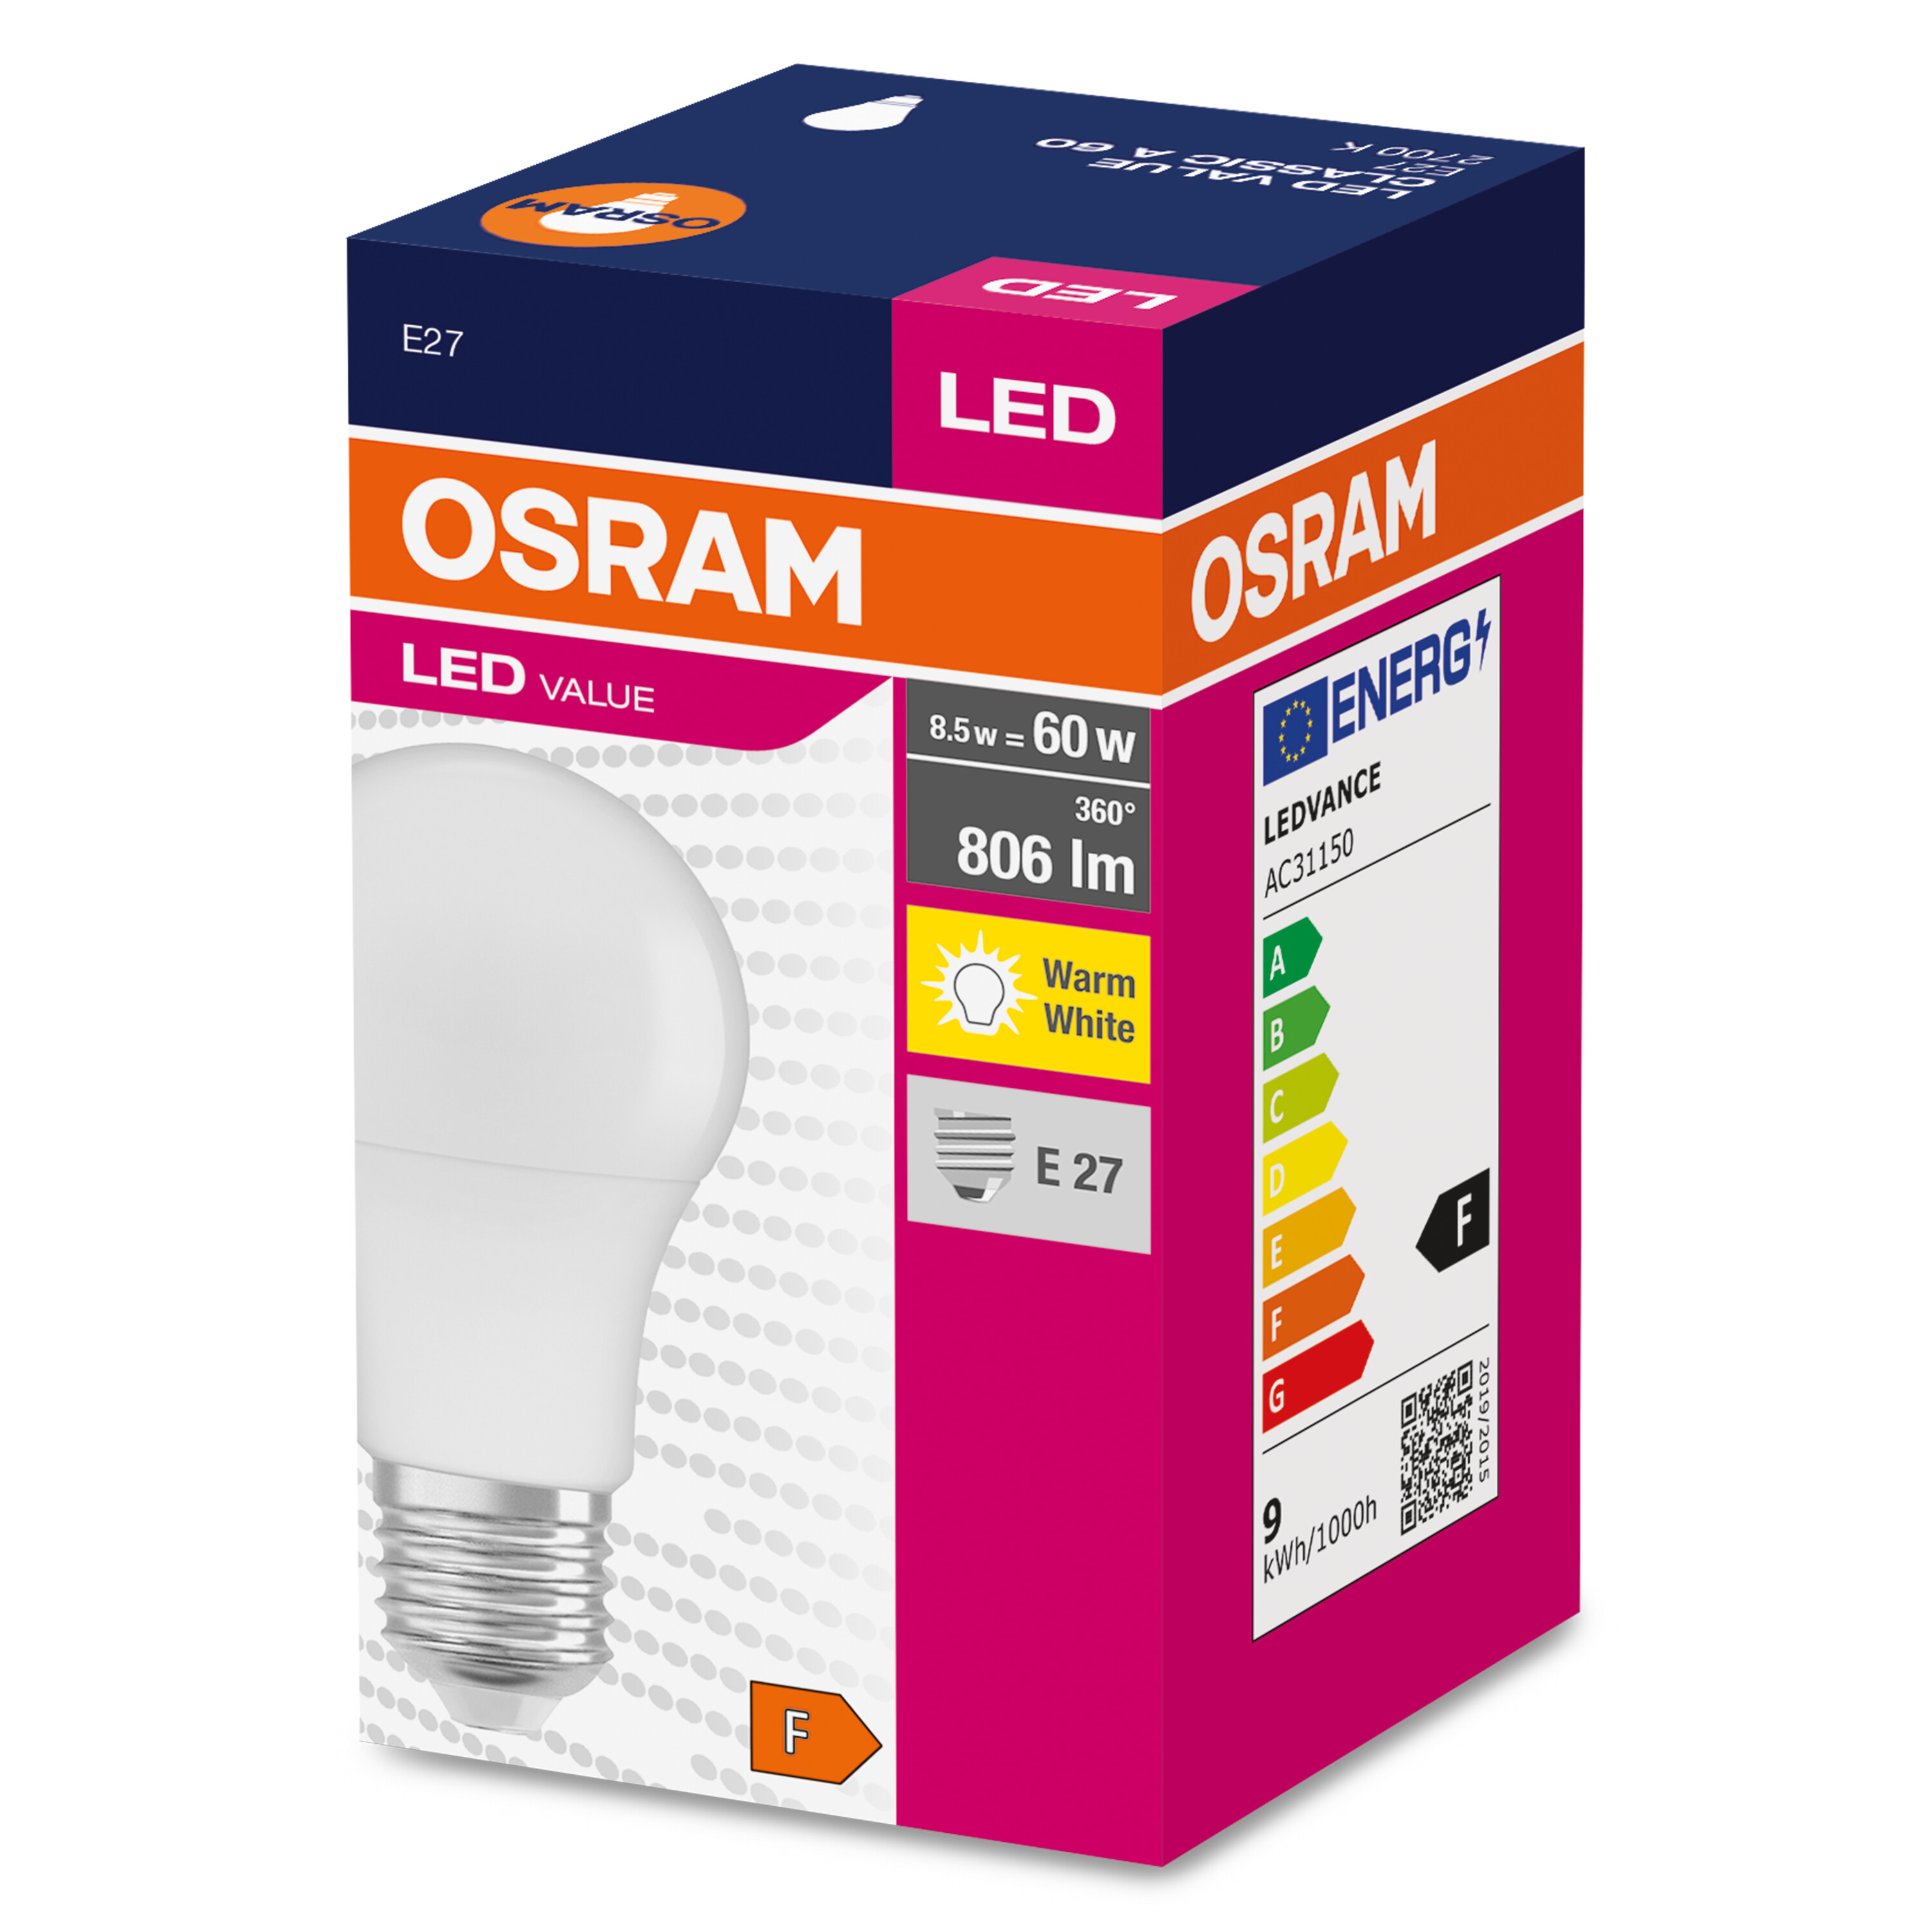 OSRAM  LED W/2700 A LED 806 Lumen Warmweiß 8.5 60 CLASSIC Lampe VALUE FR E27